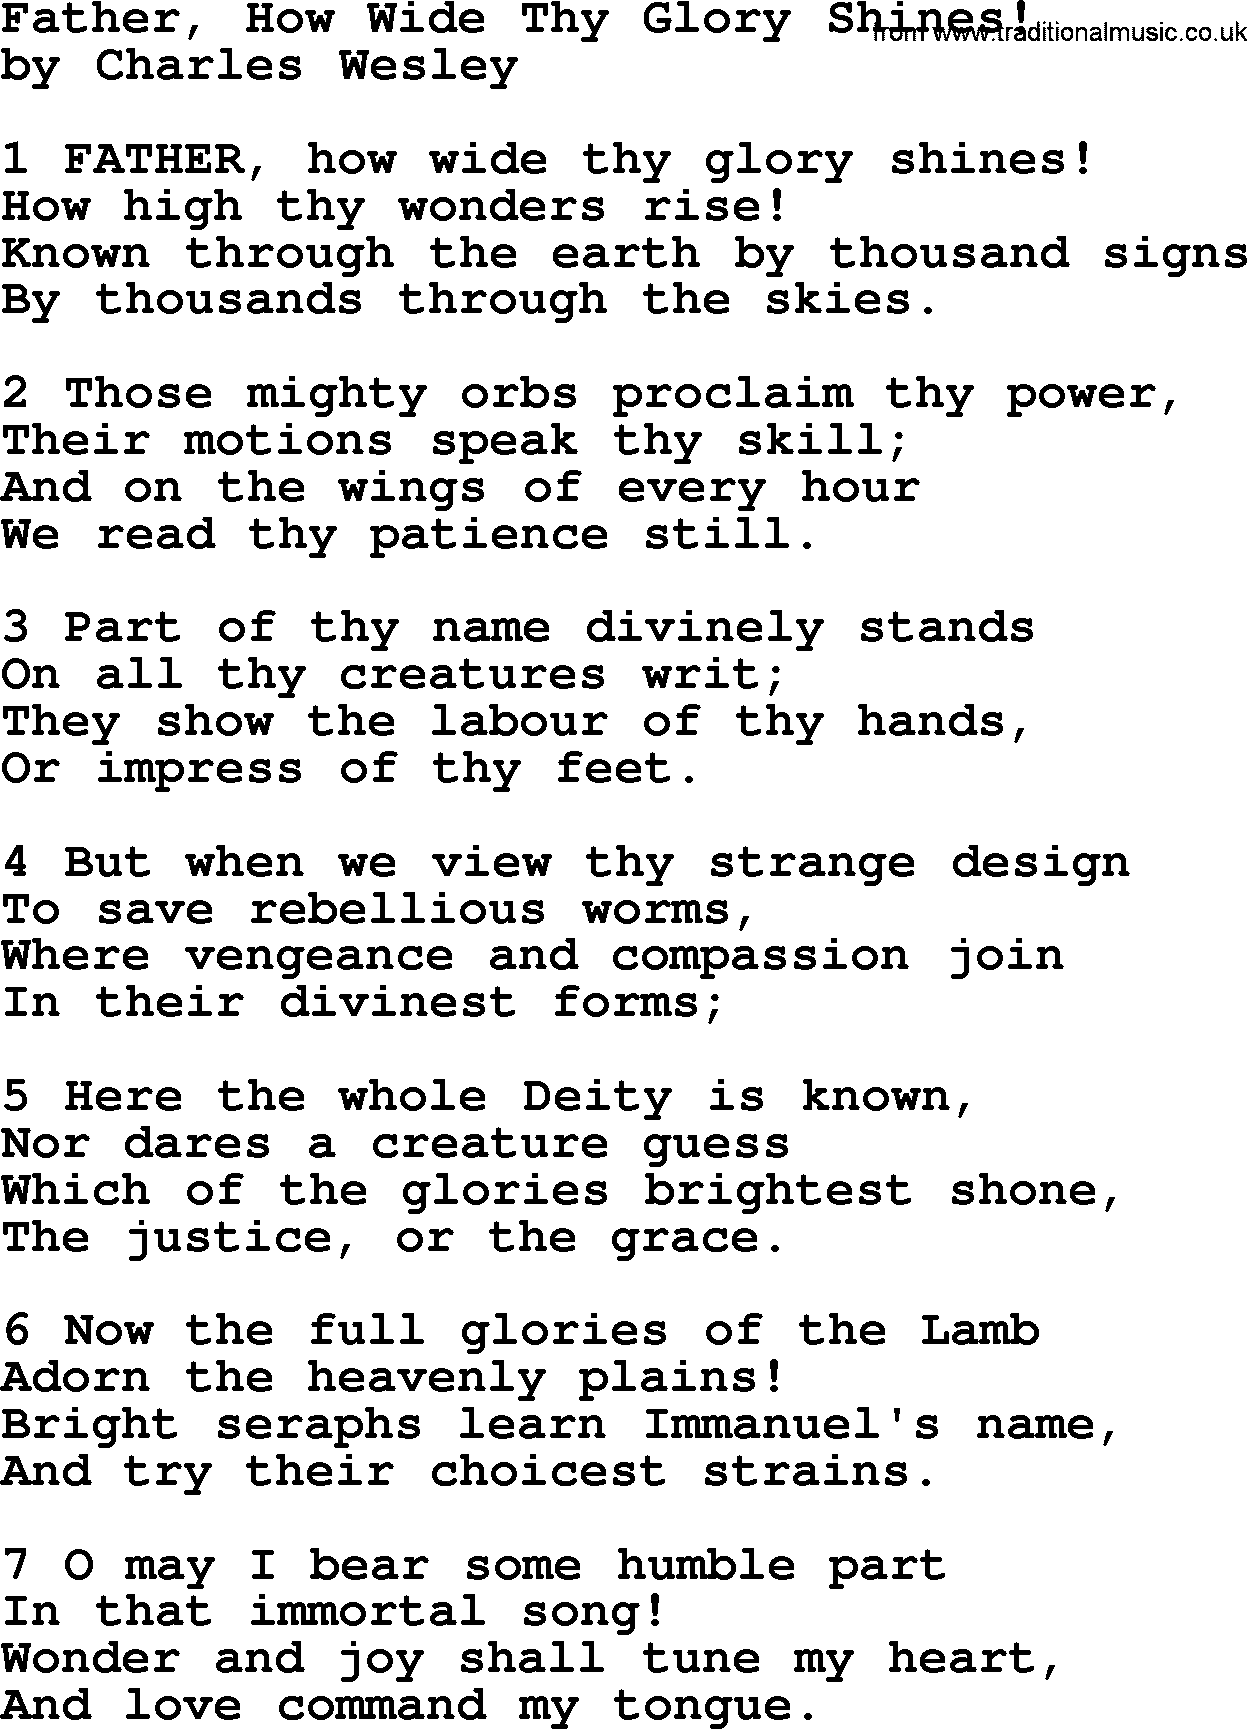 Charles Wesley hymn: Father, How Wide Thy Glory Shines!, lyrics